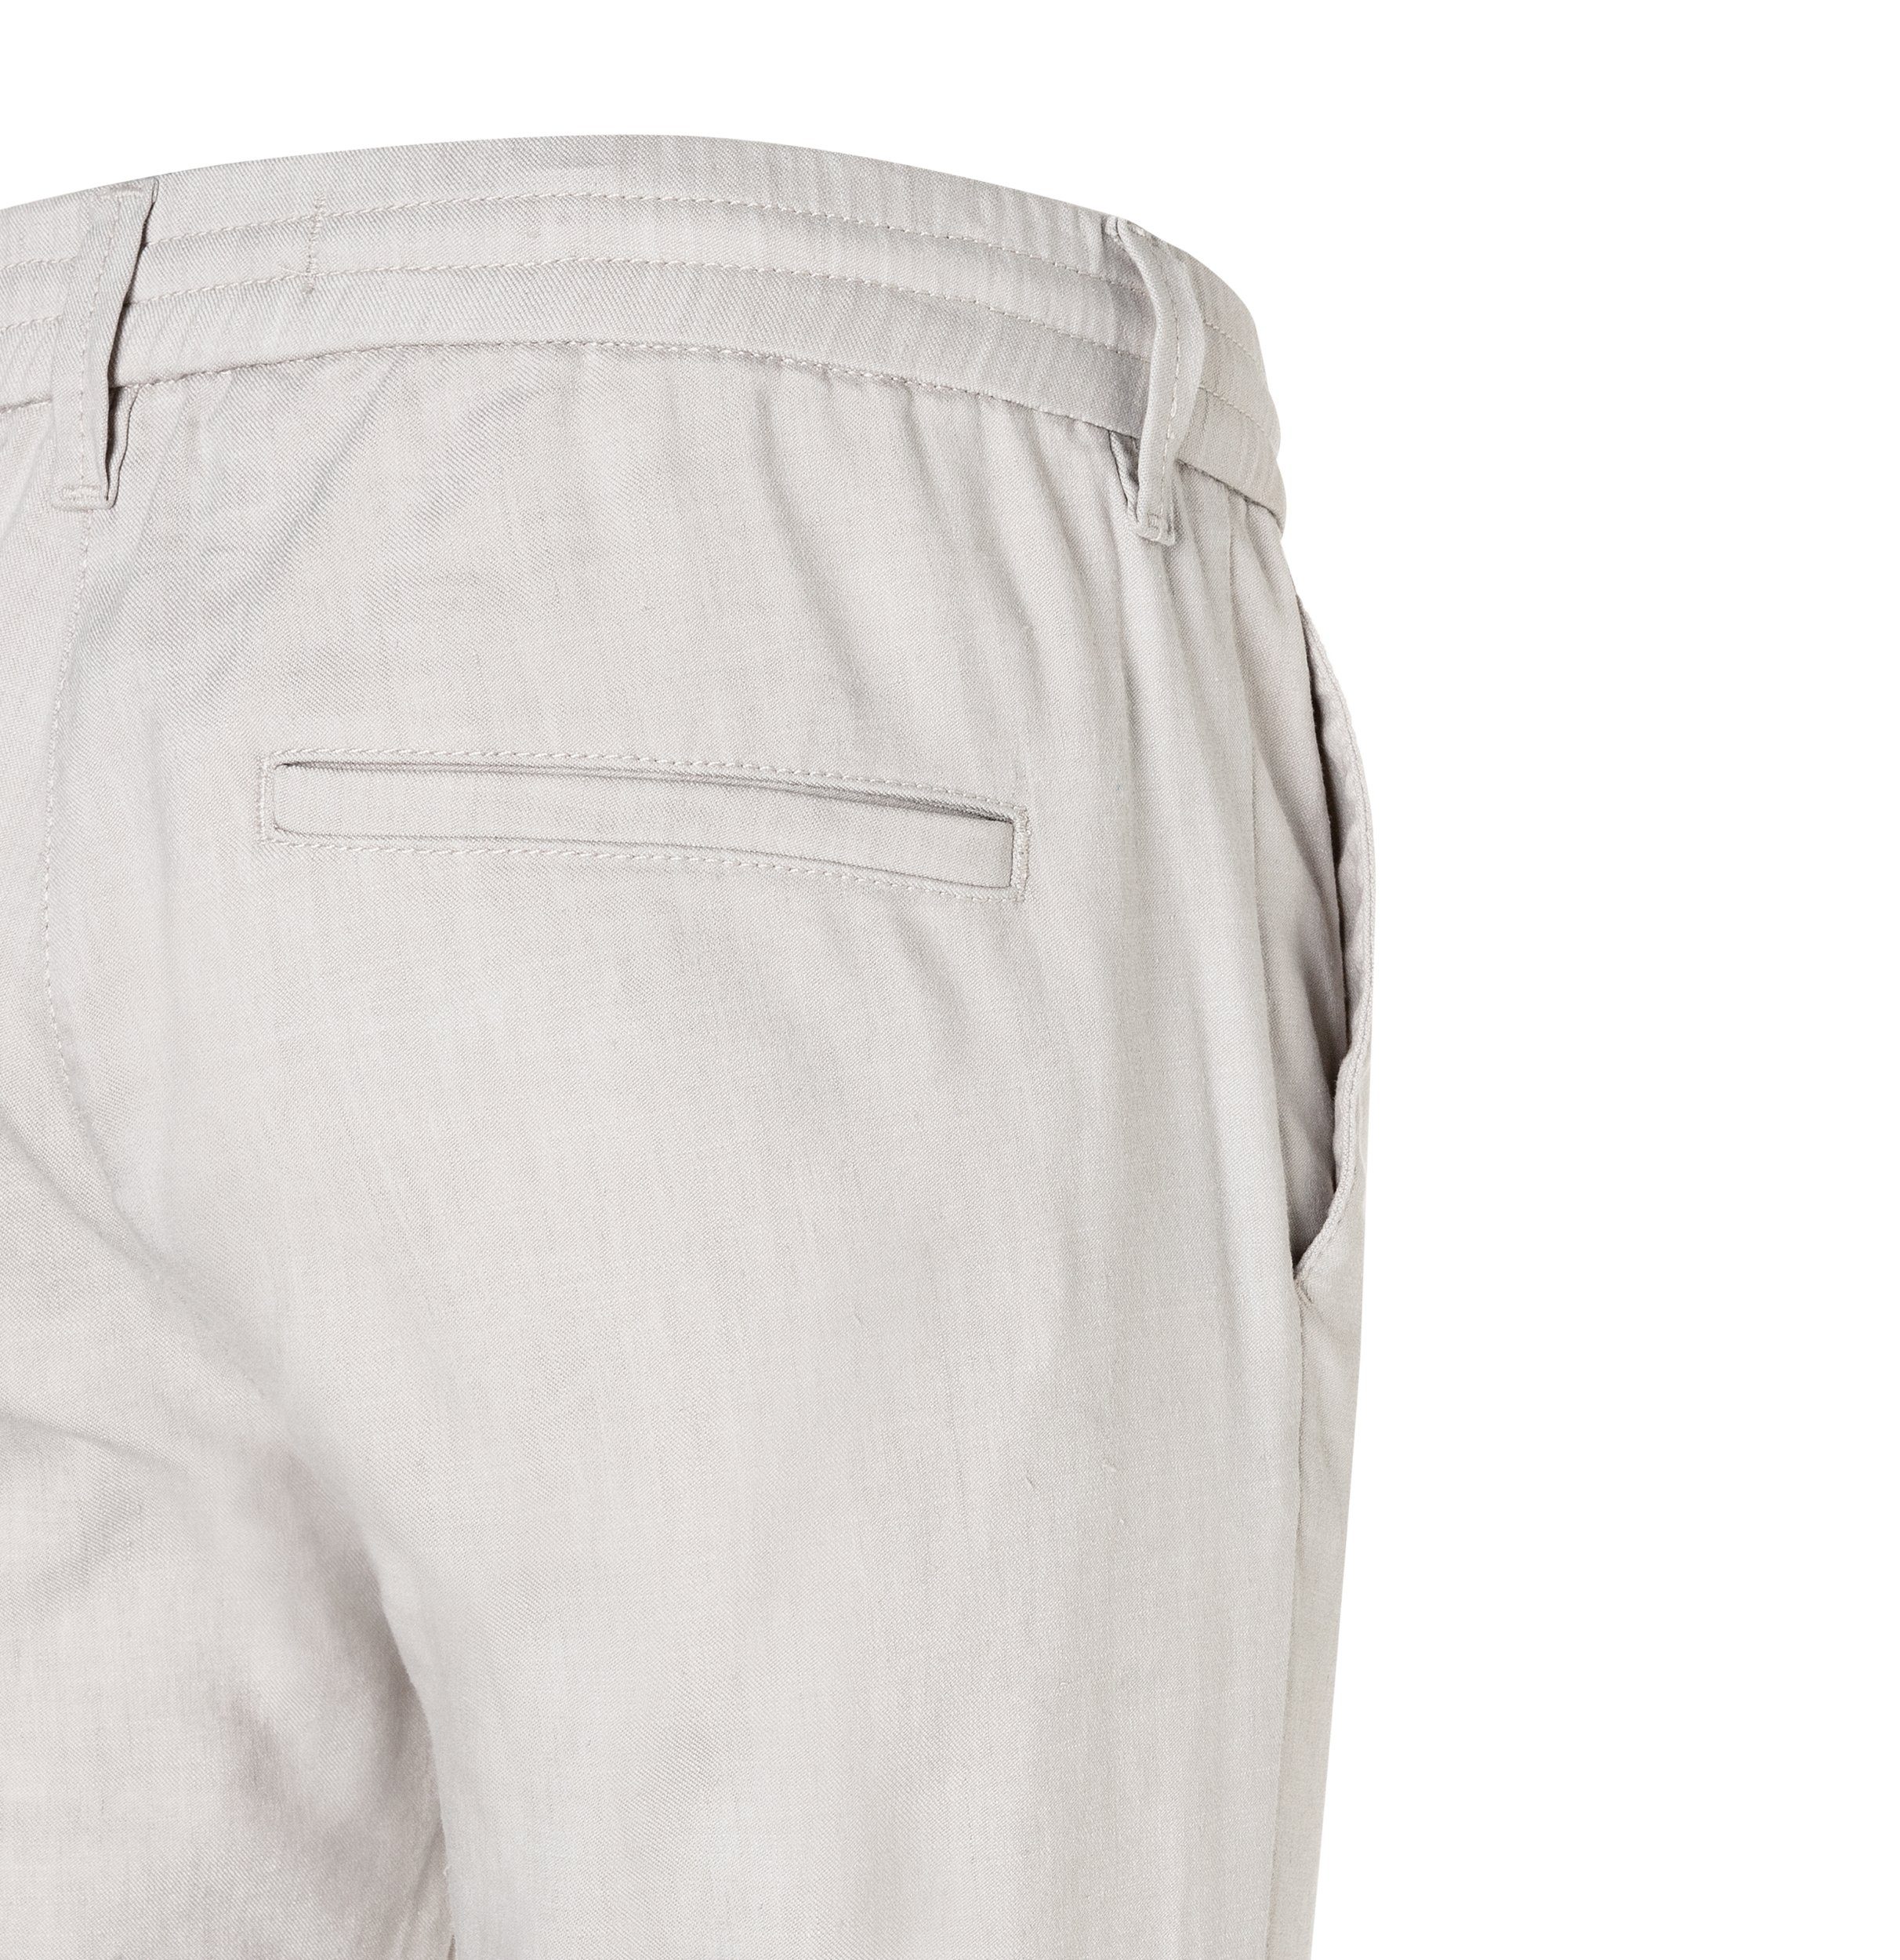 Linen MAC Lennox Sport, Stretch JEANS 5-Pocket-Jeans Trousers - MAC Men